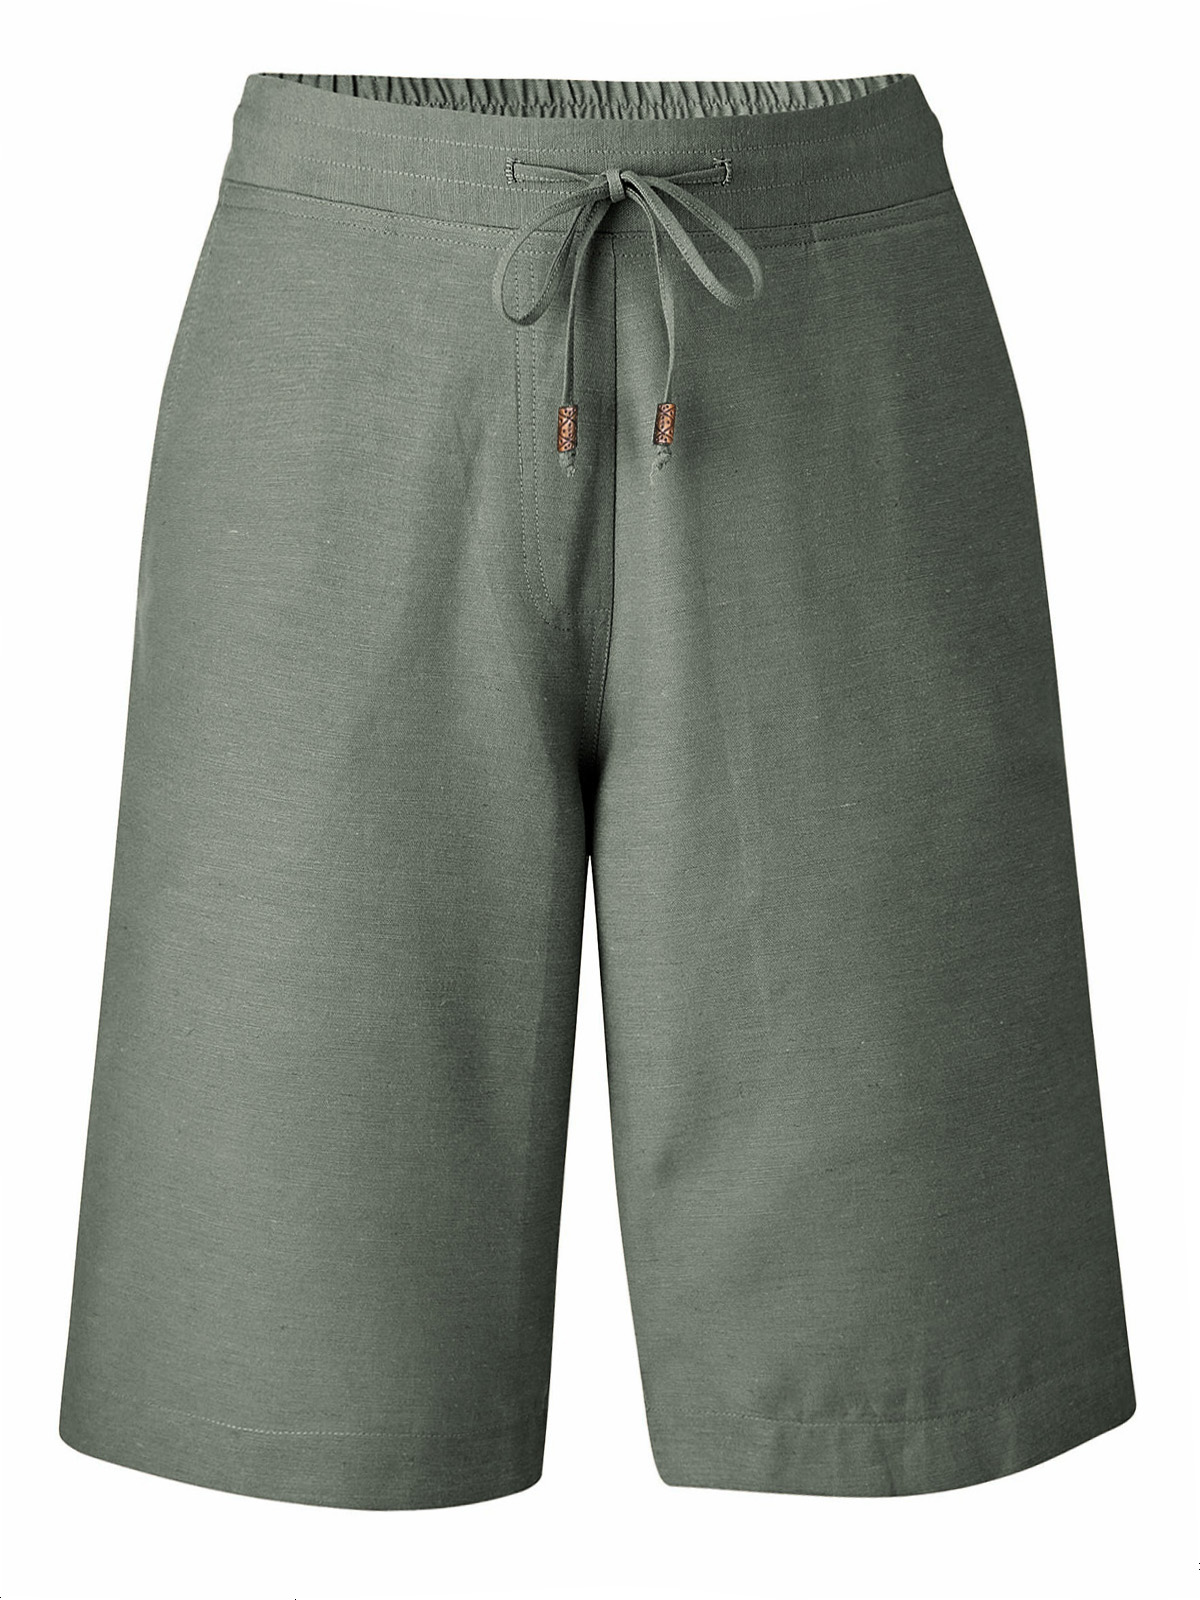 Capsule - - Capsule KHAKI Linen Blend Pull On Shorts - Plus Size 14 to 26